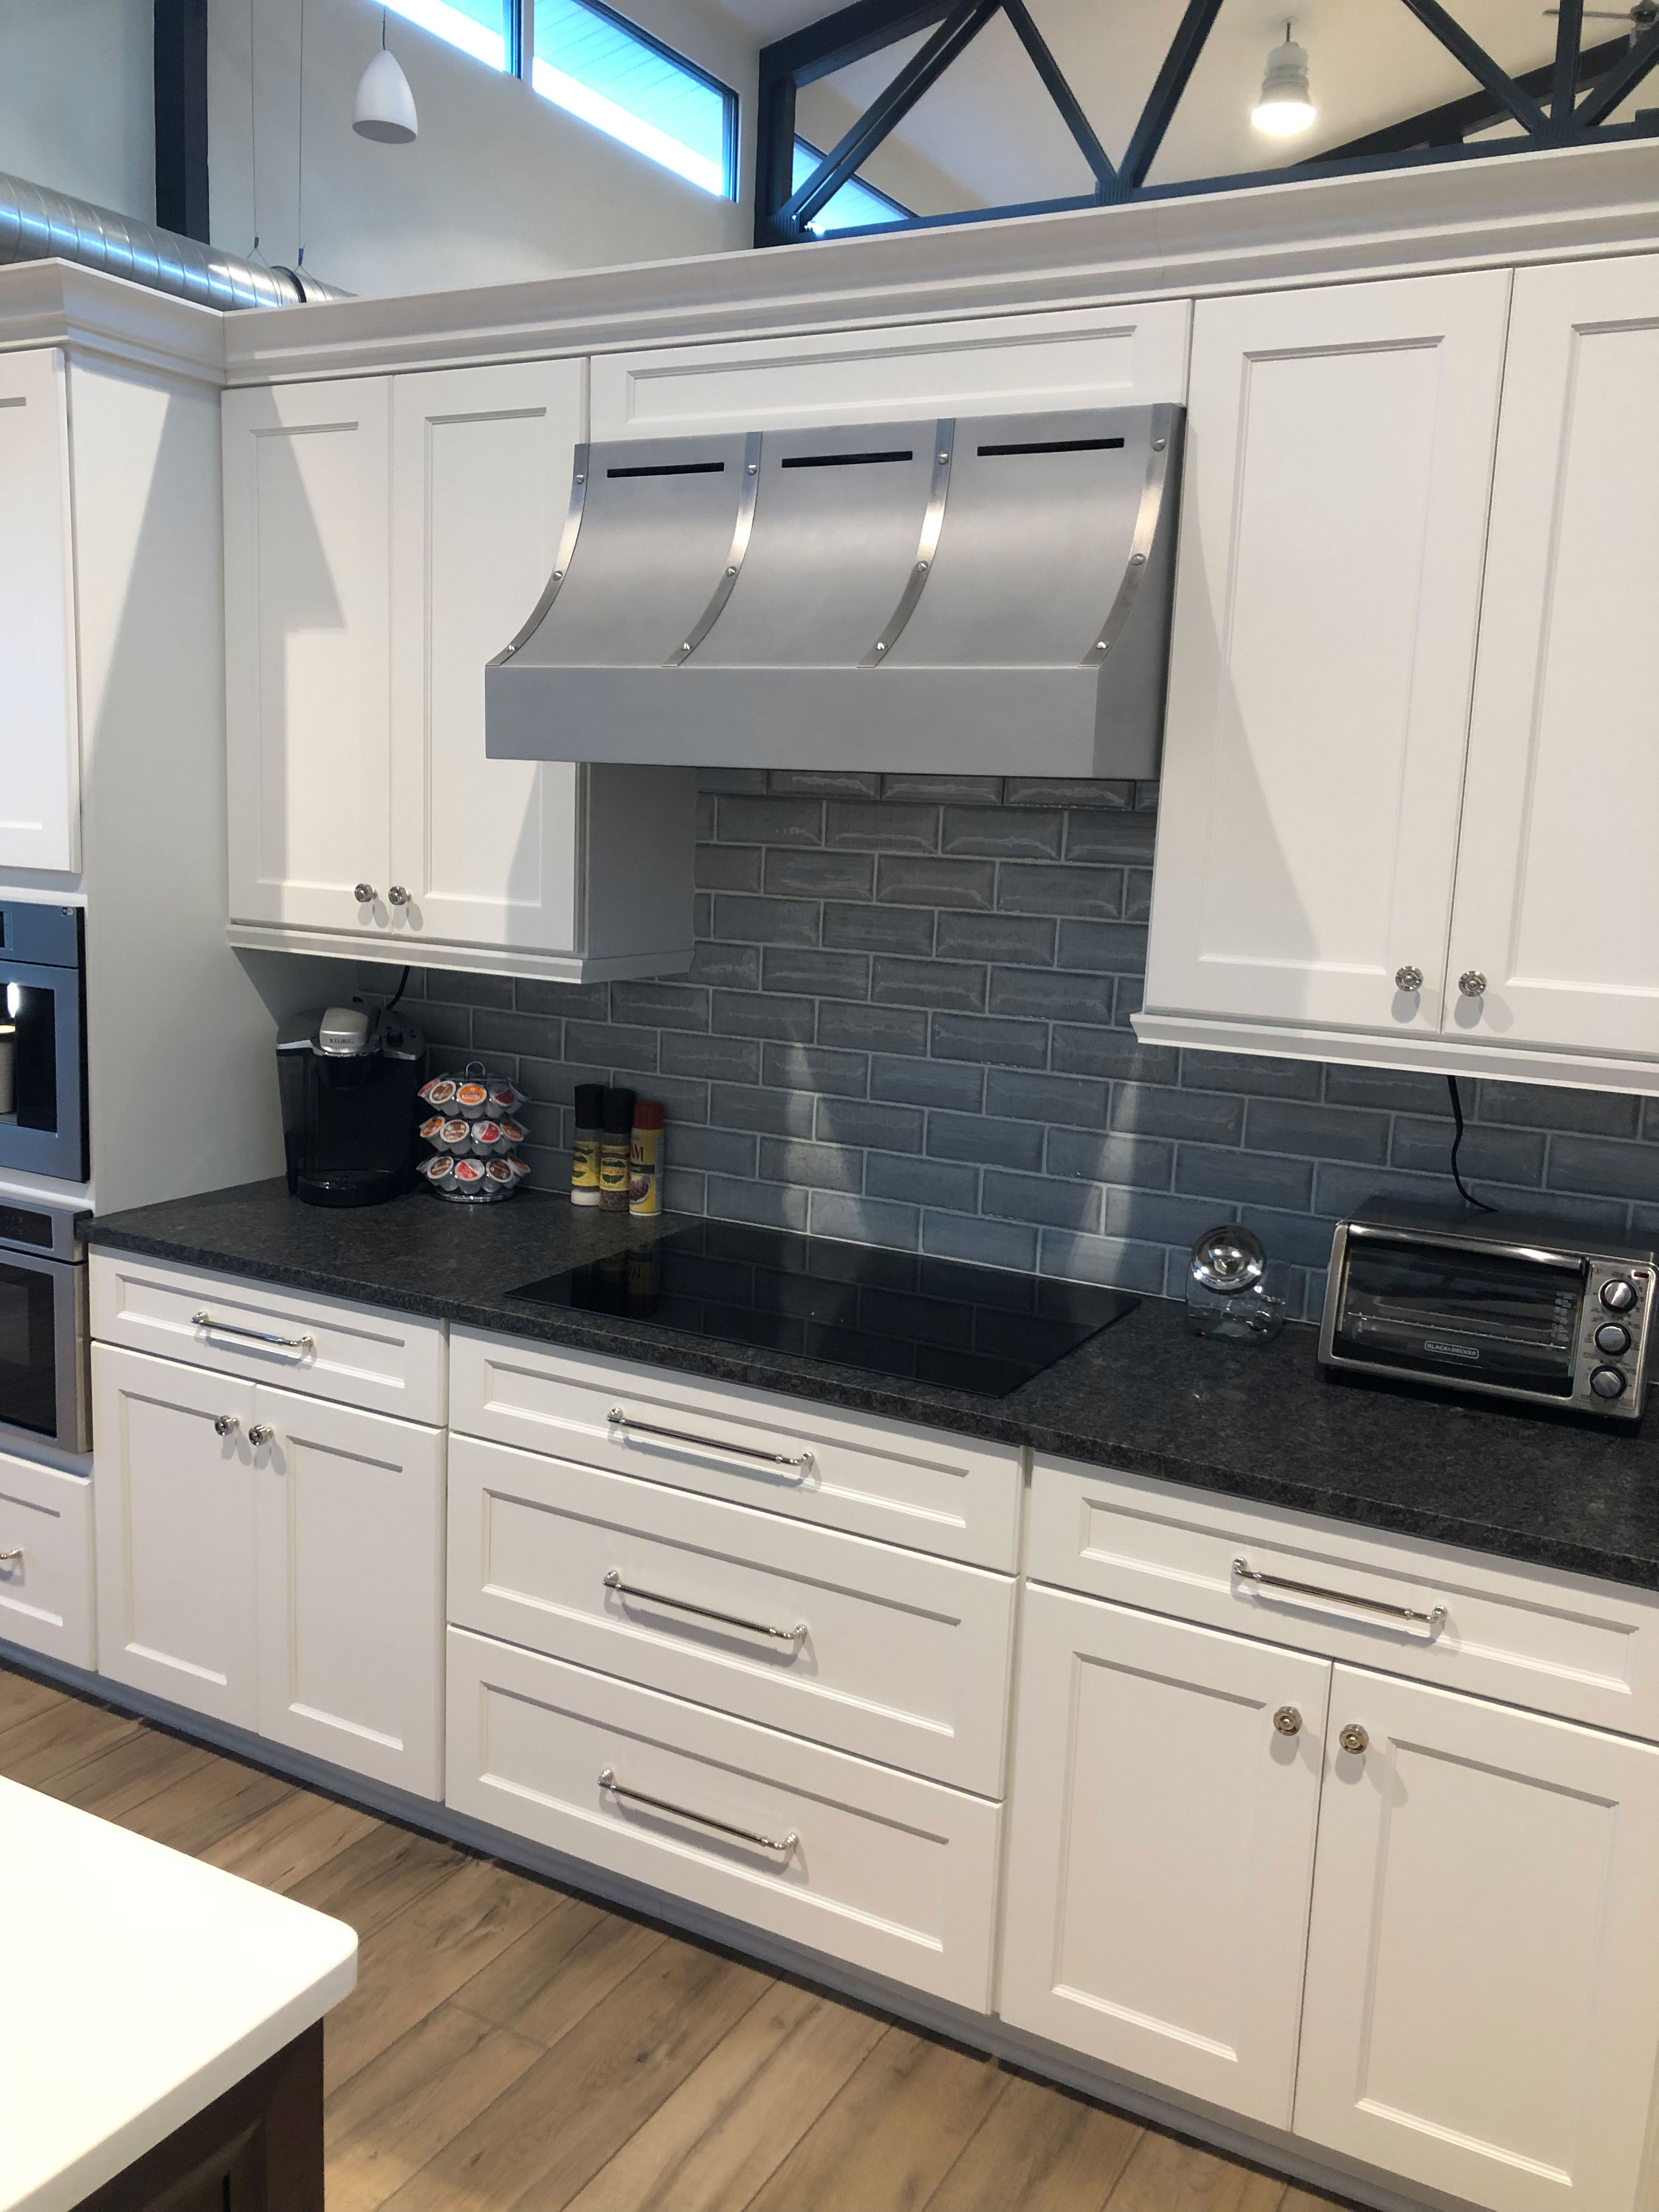 Classic kitchen design featuring with unique range hood, white kitchen cabinets, black kitchen countertops, brick backsplash